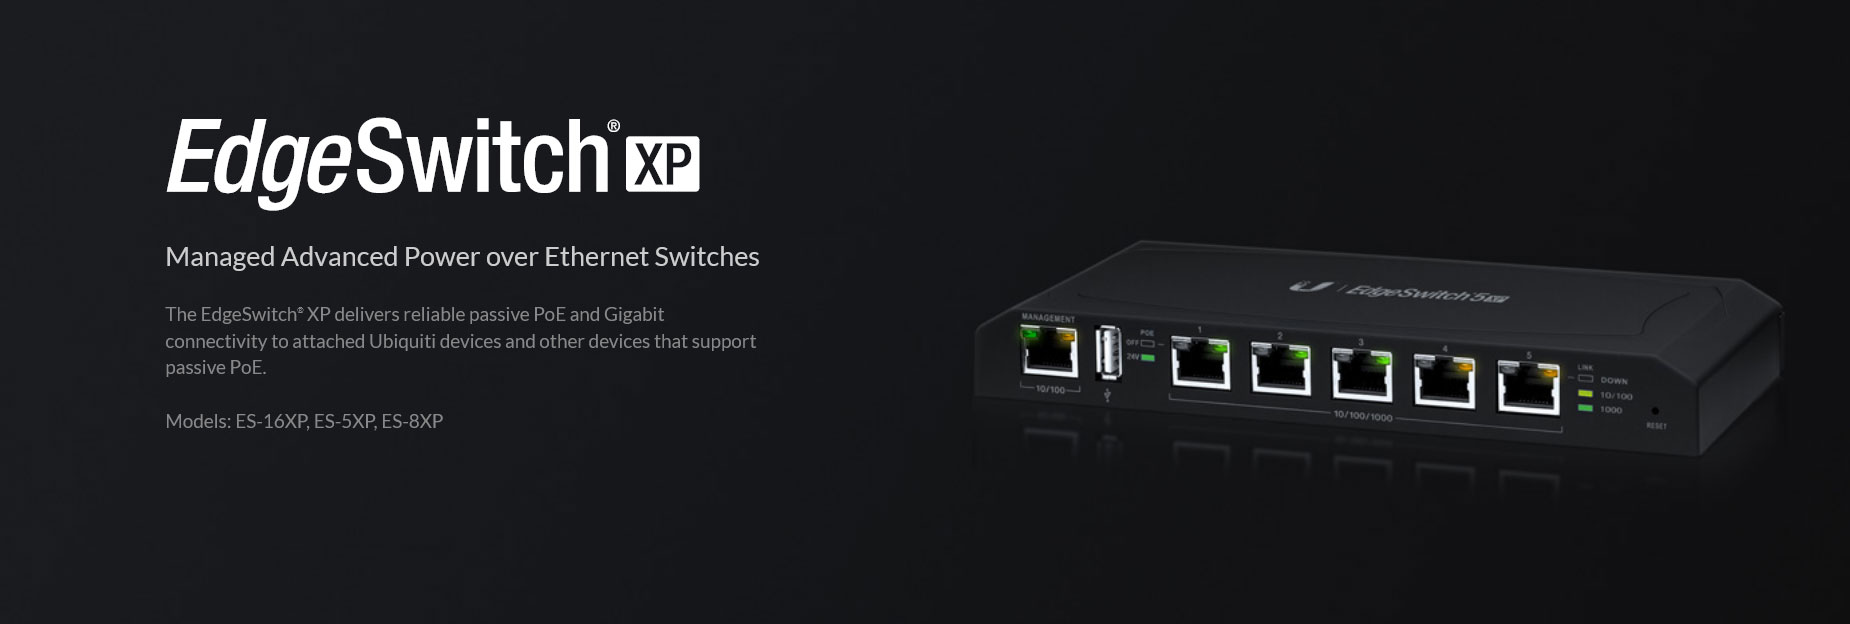 Ubiquiti TOUGH 5 Port Gigabit Switch TS-5-POE ES-5XP Intro